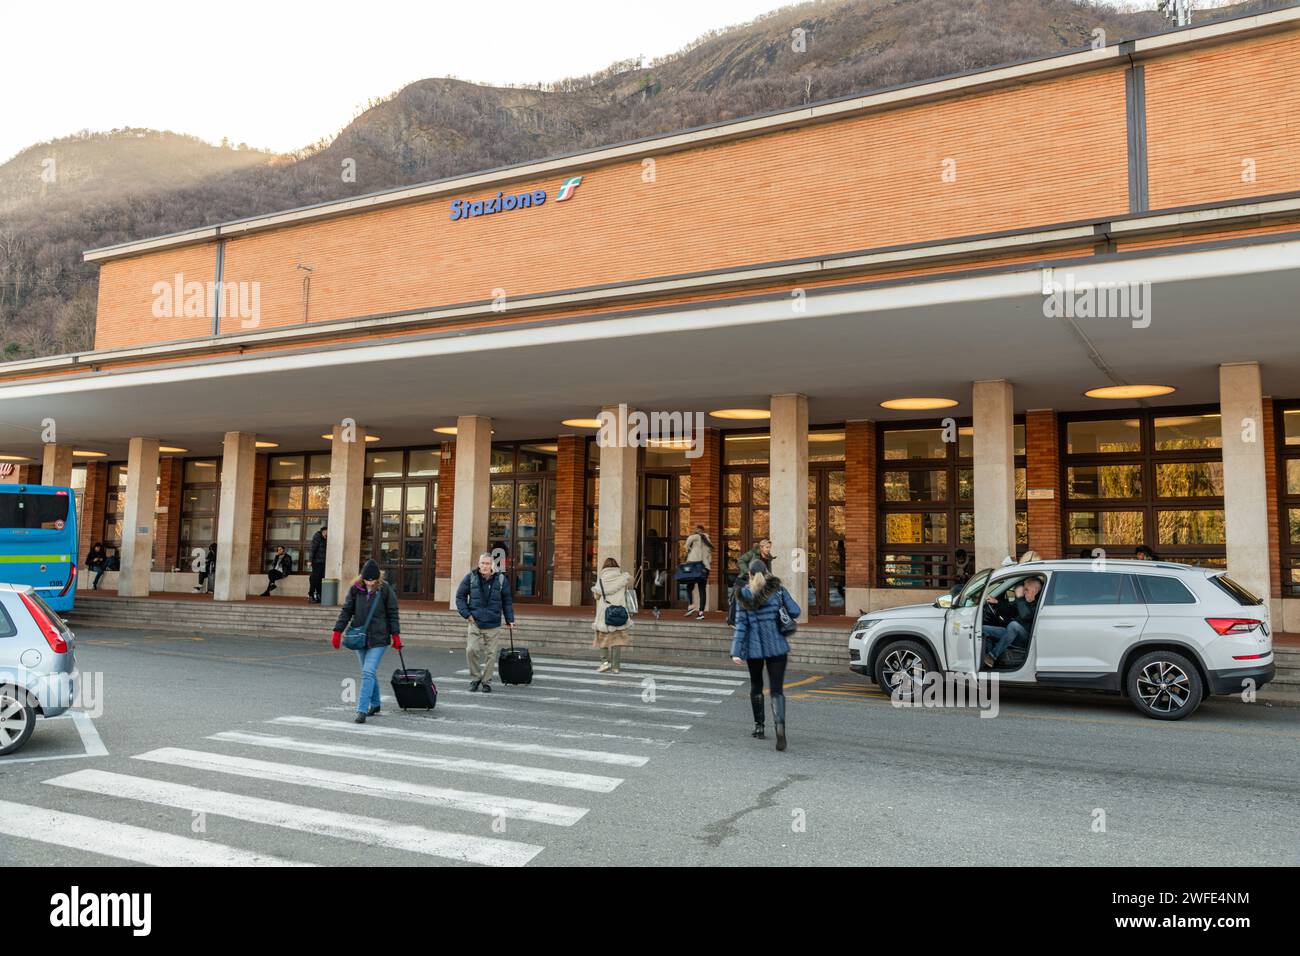 The main exterior entrance to the Como San Giovanni train station in Como, Italy Stock Photo